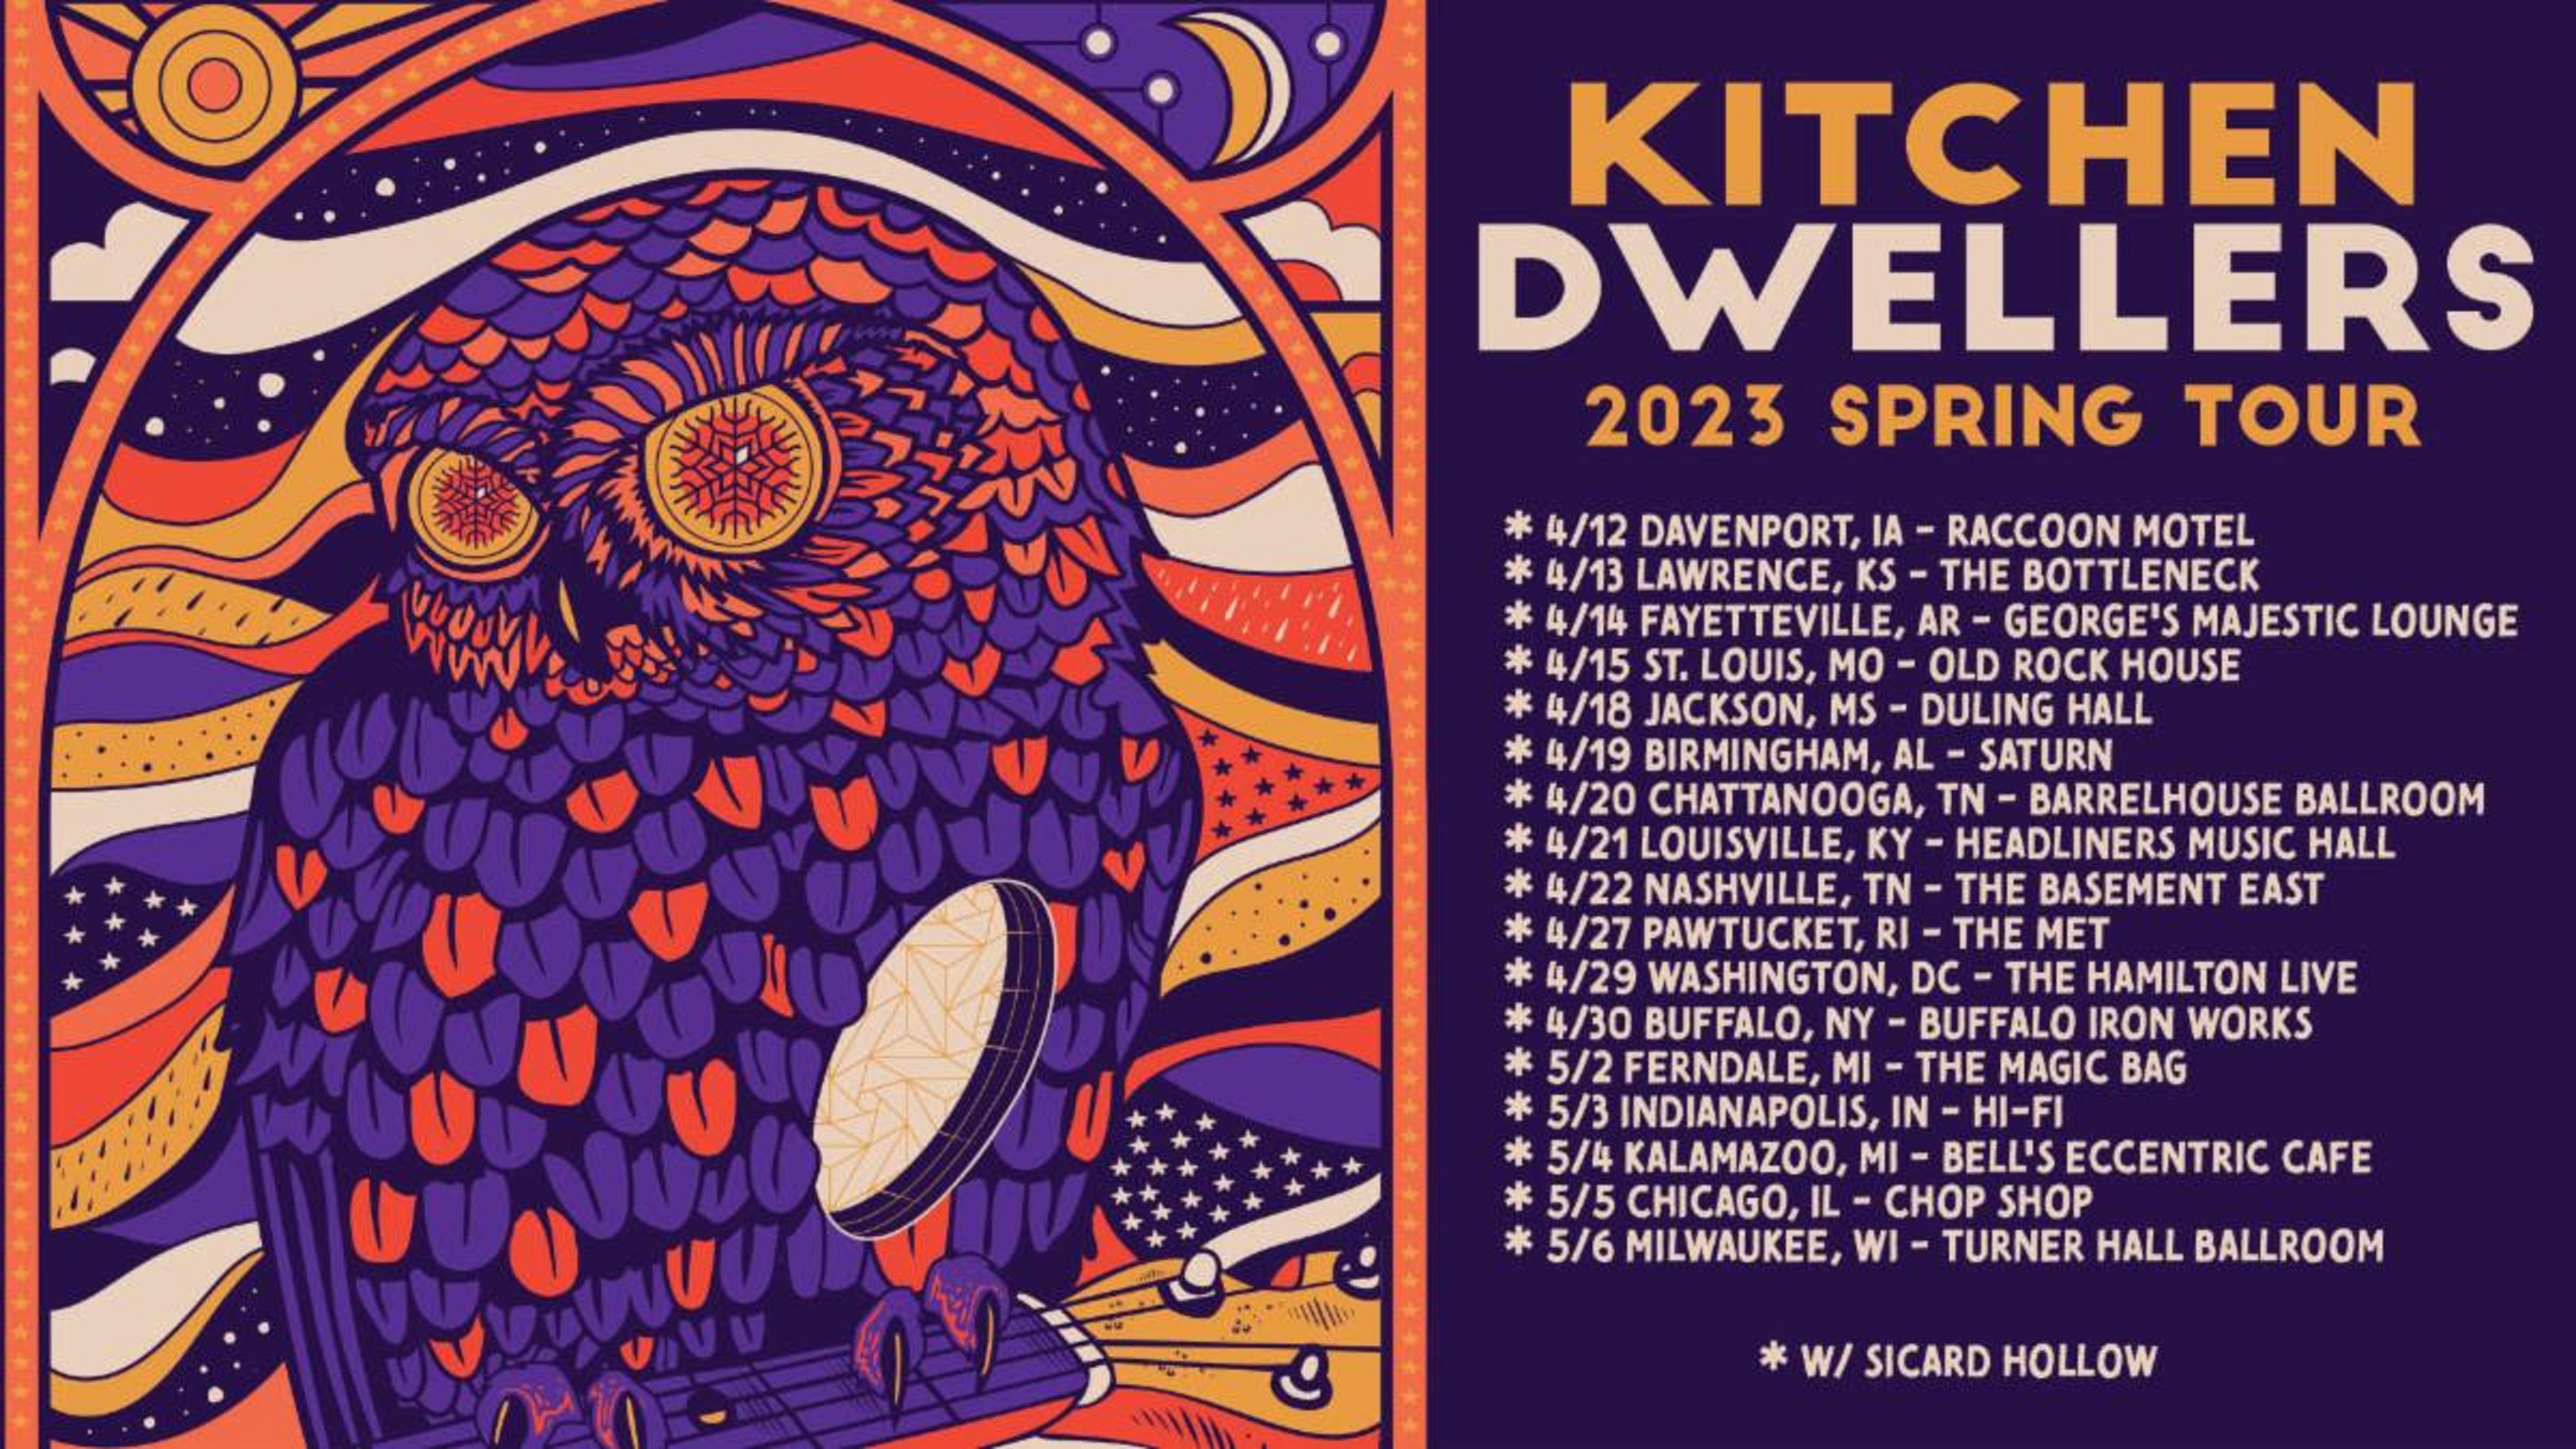 Kitchen Dwellers announce spring 2023 tour dates